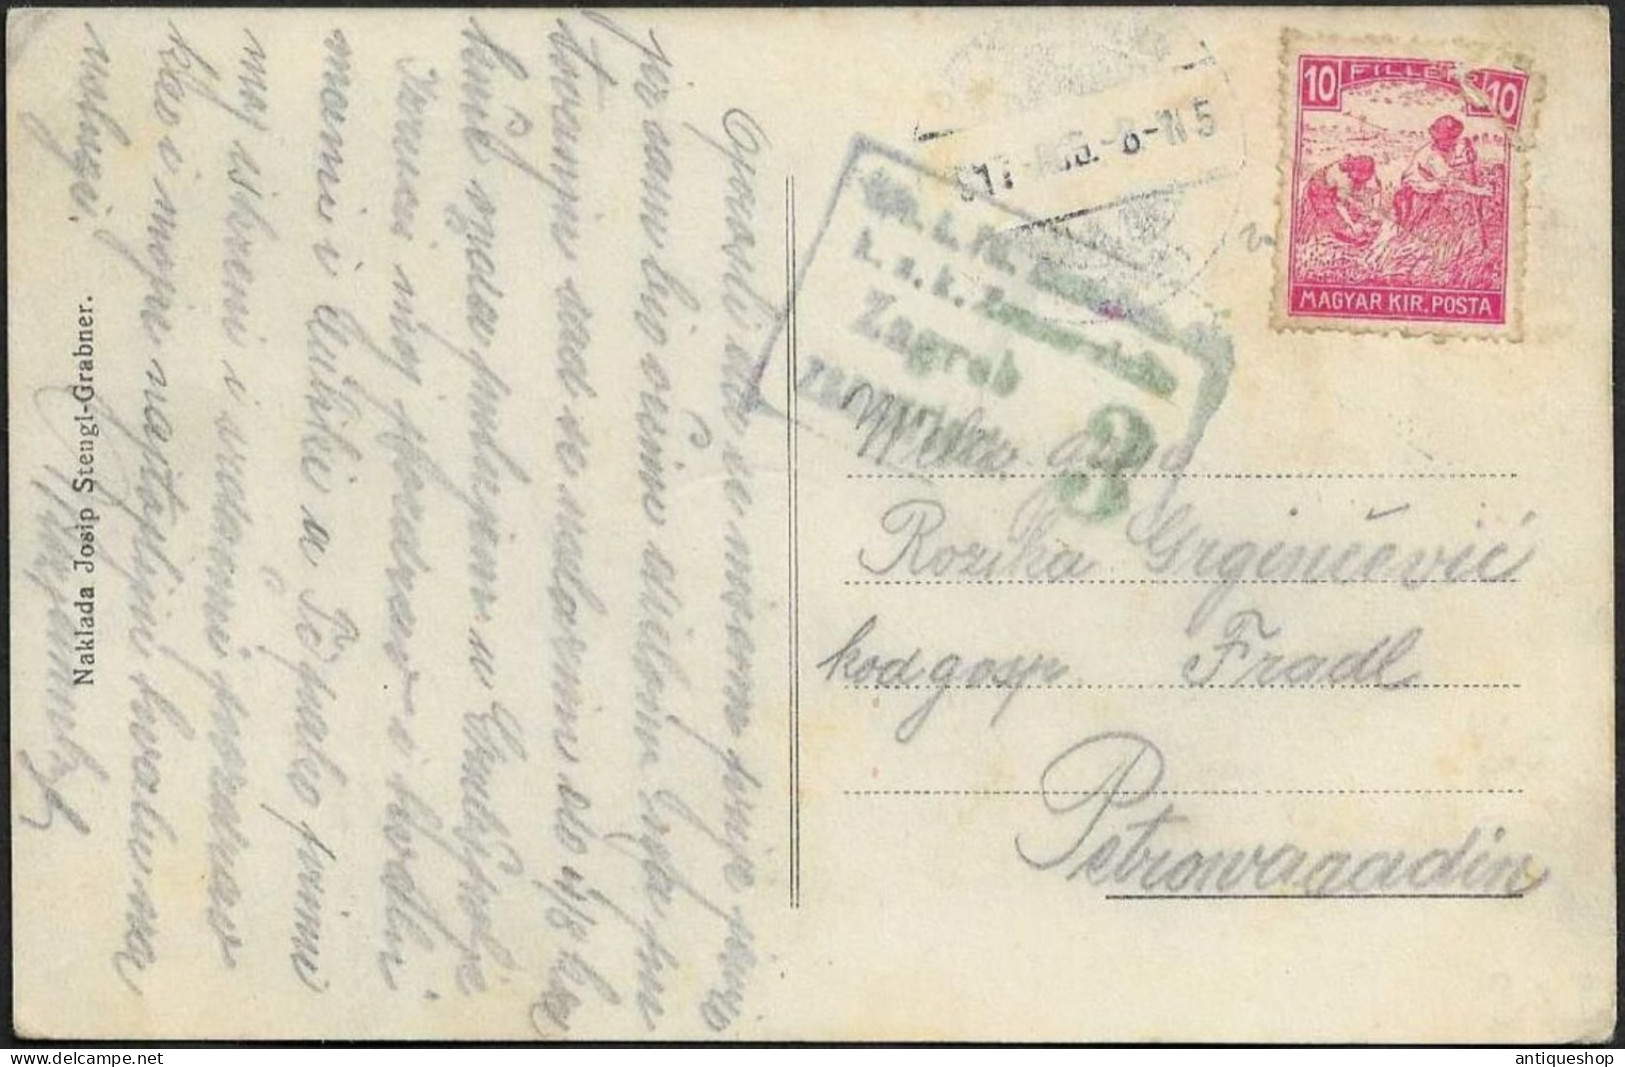 Croatia-----Jastrebarsko-----old Postcard - Croatia